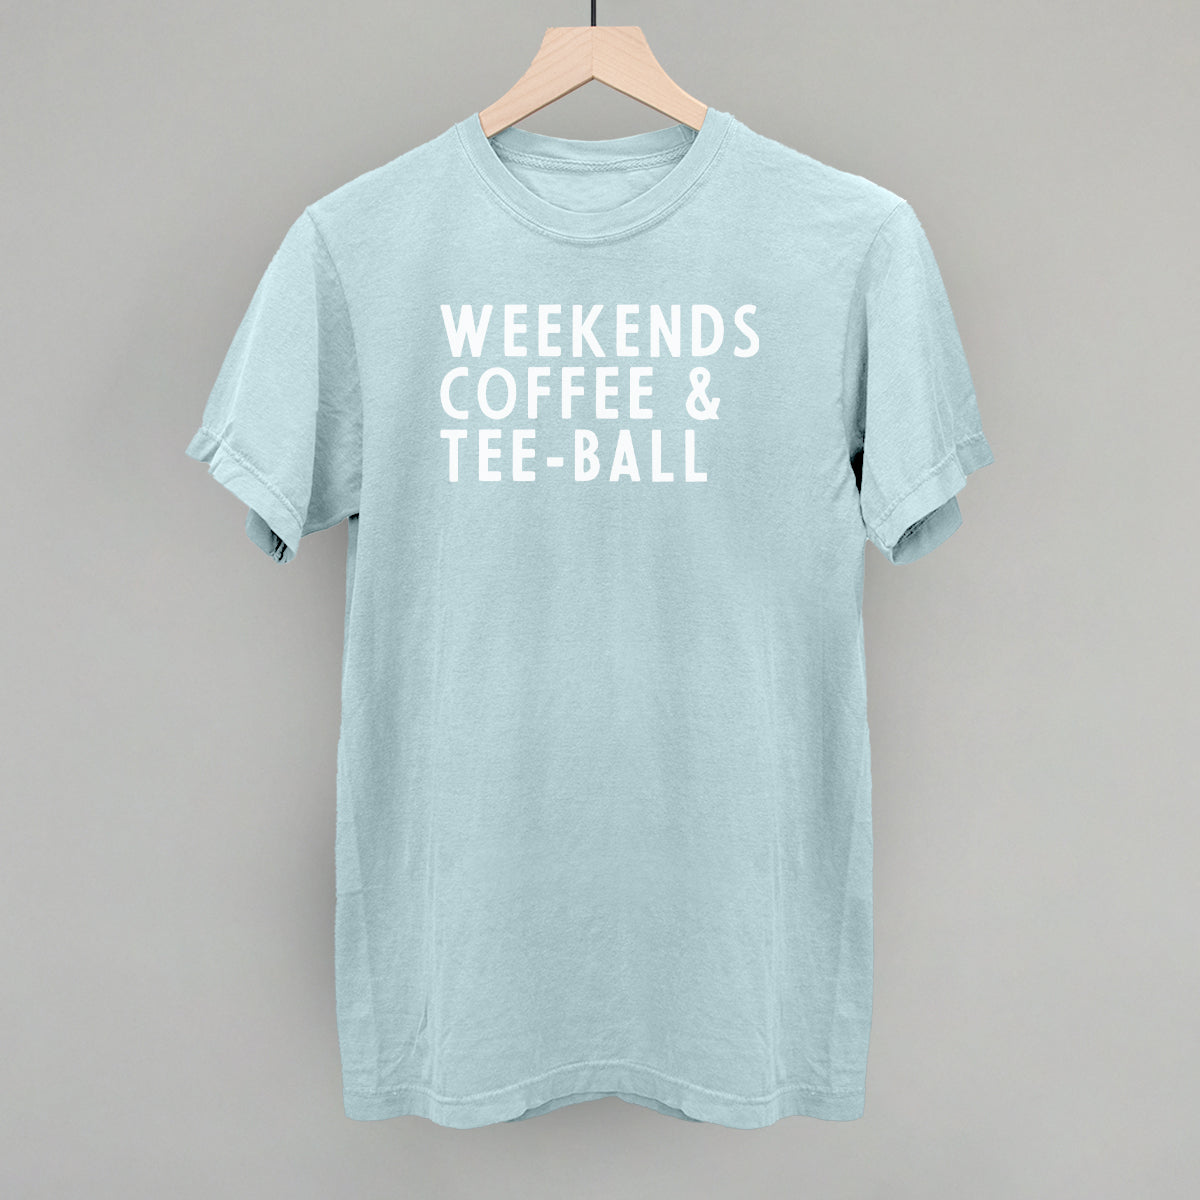 Weekends Coffee & Tee-Ball